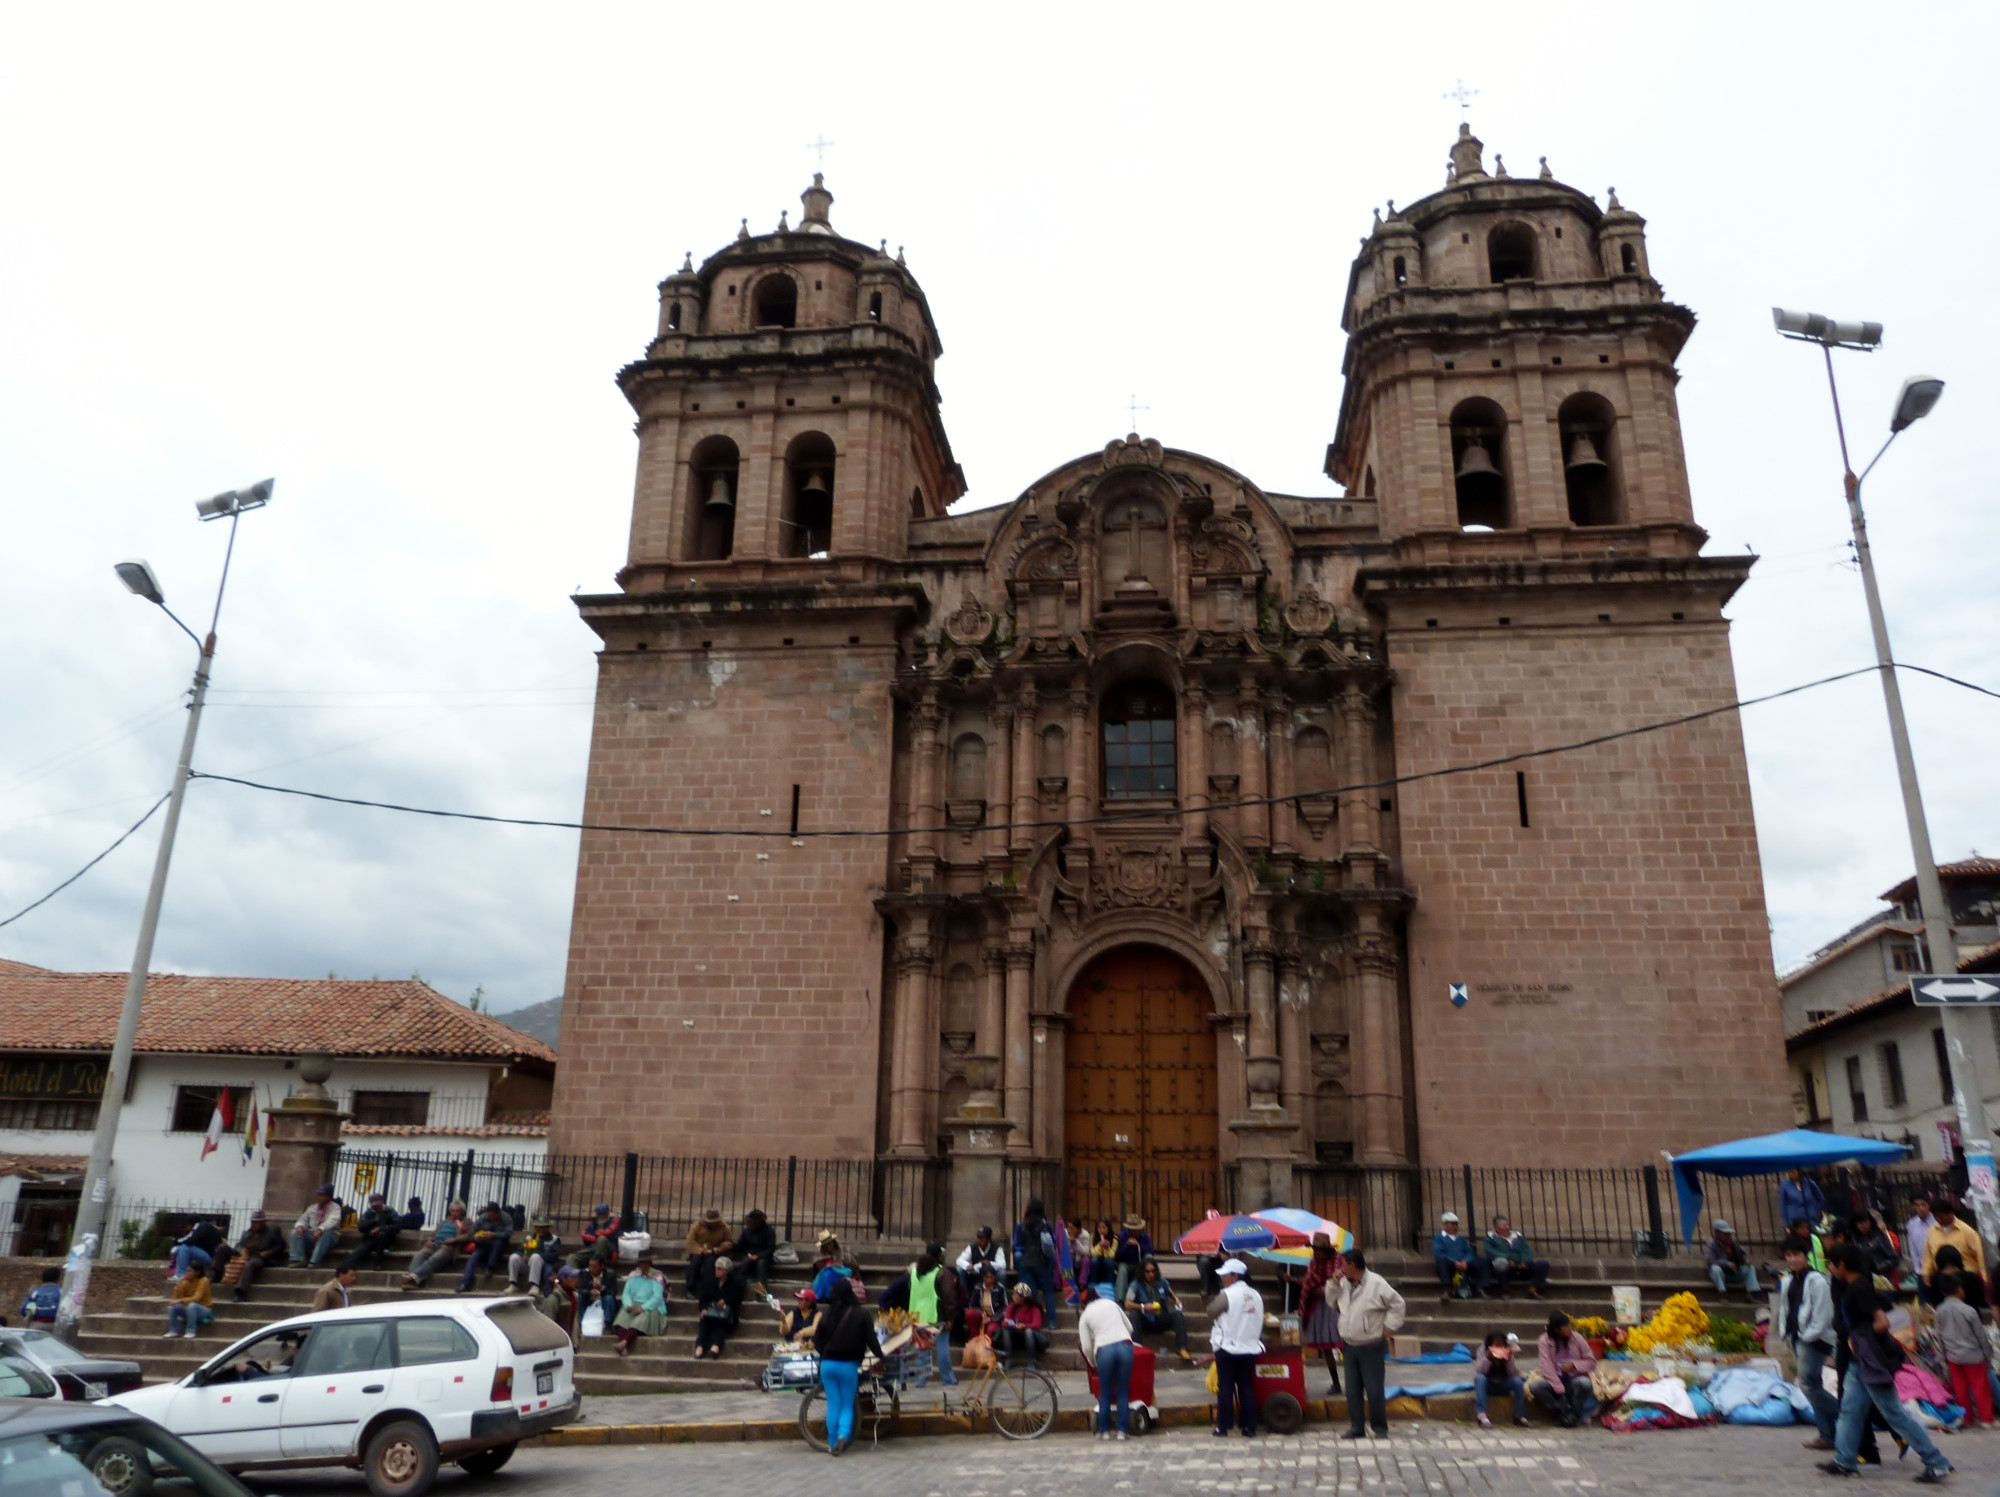 The Iglesia de la Compañía de Jesús